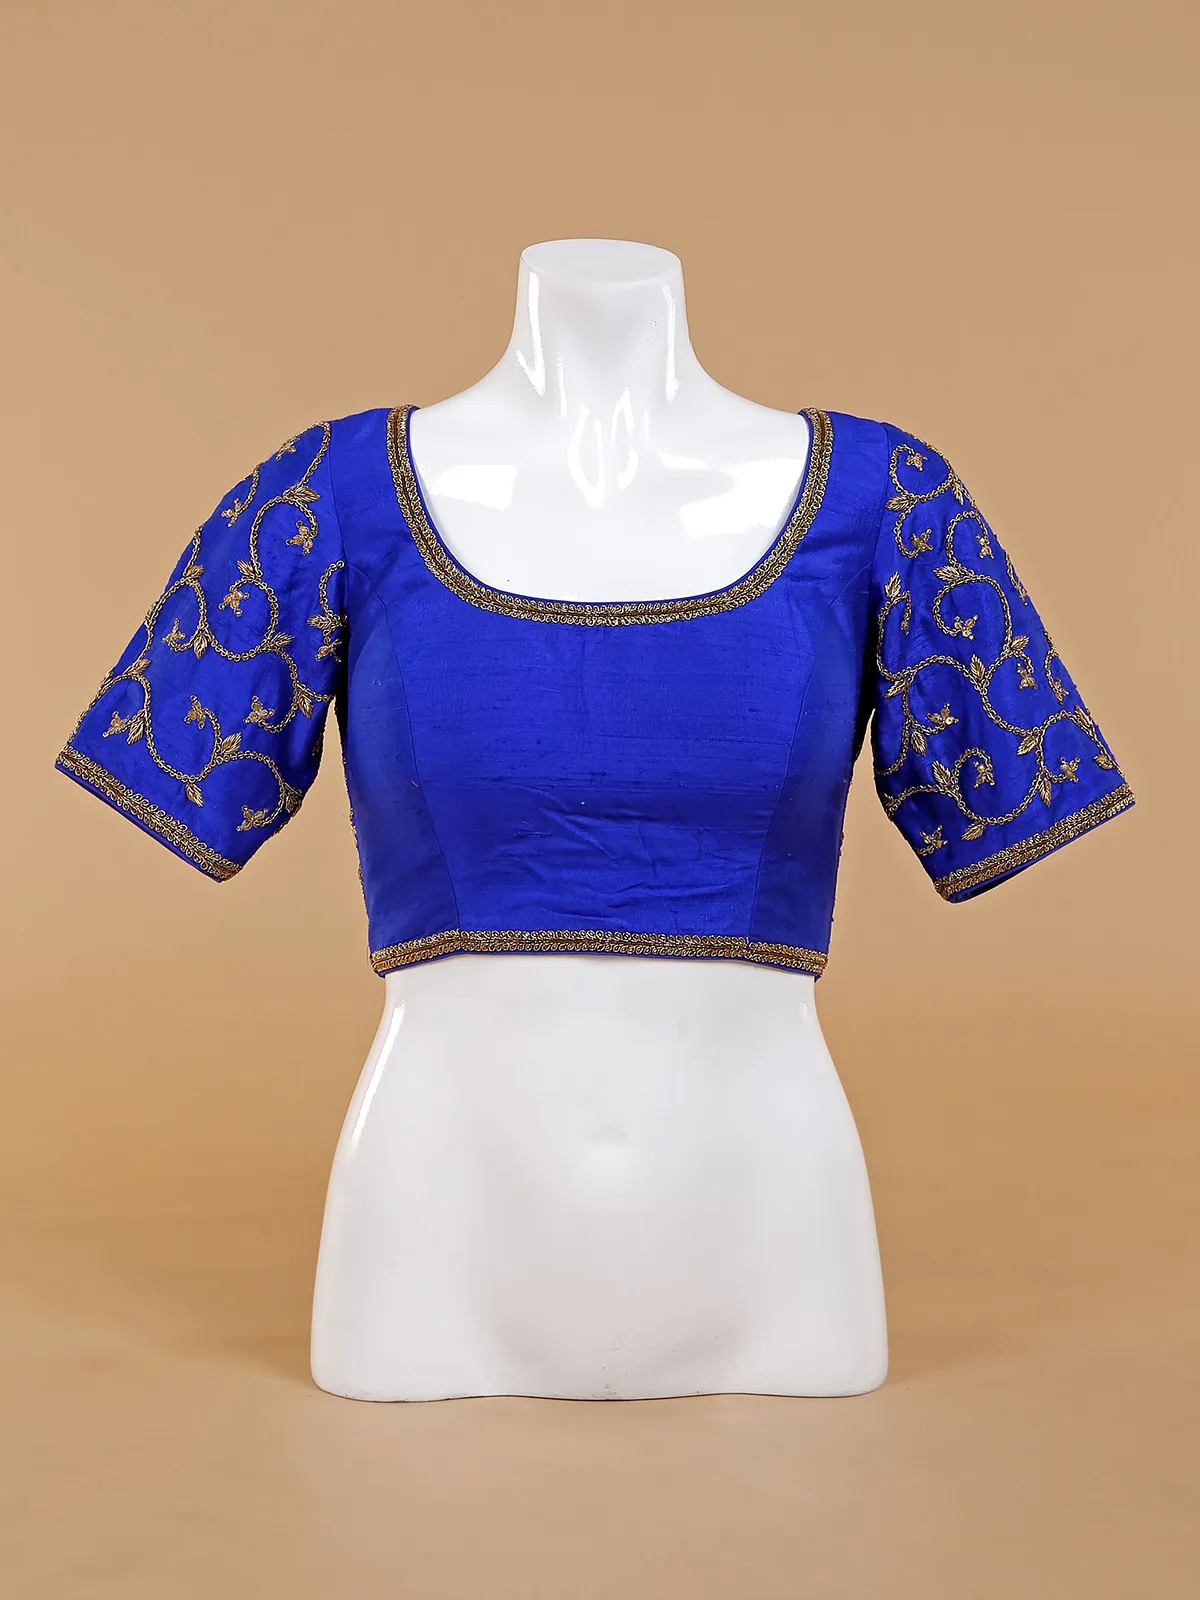 Attractive blue raw silk blouse